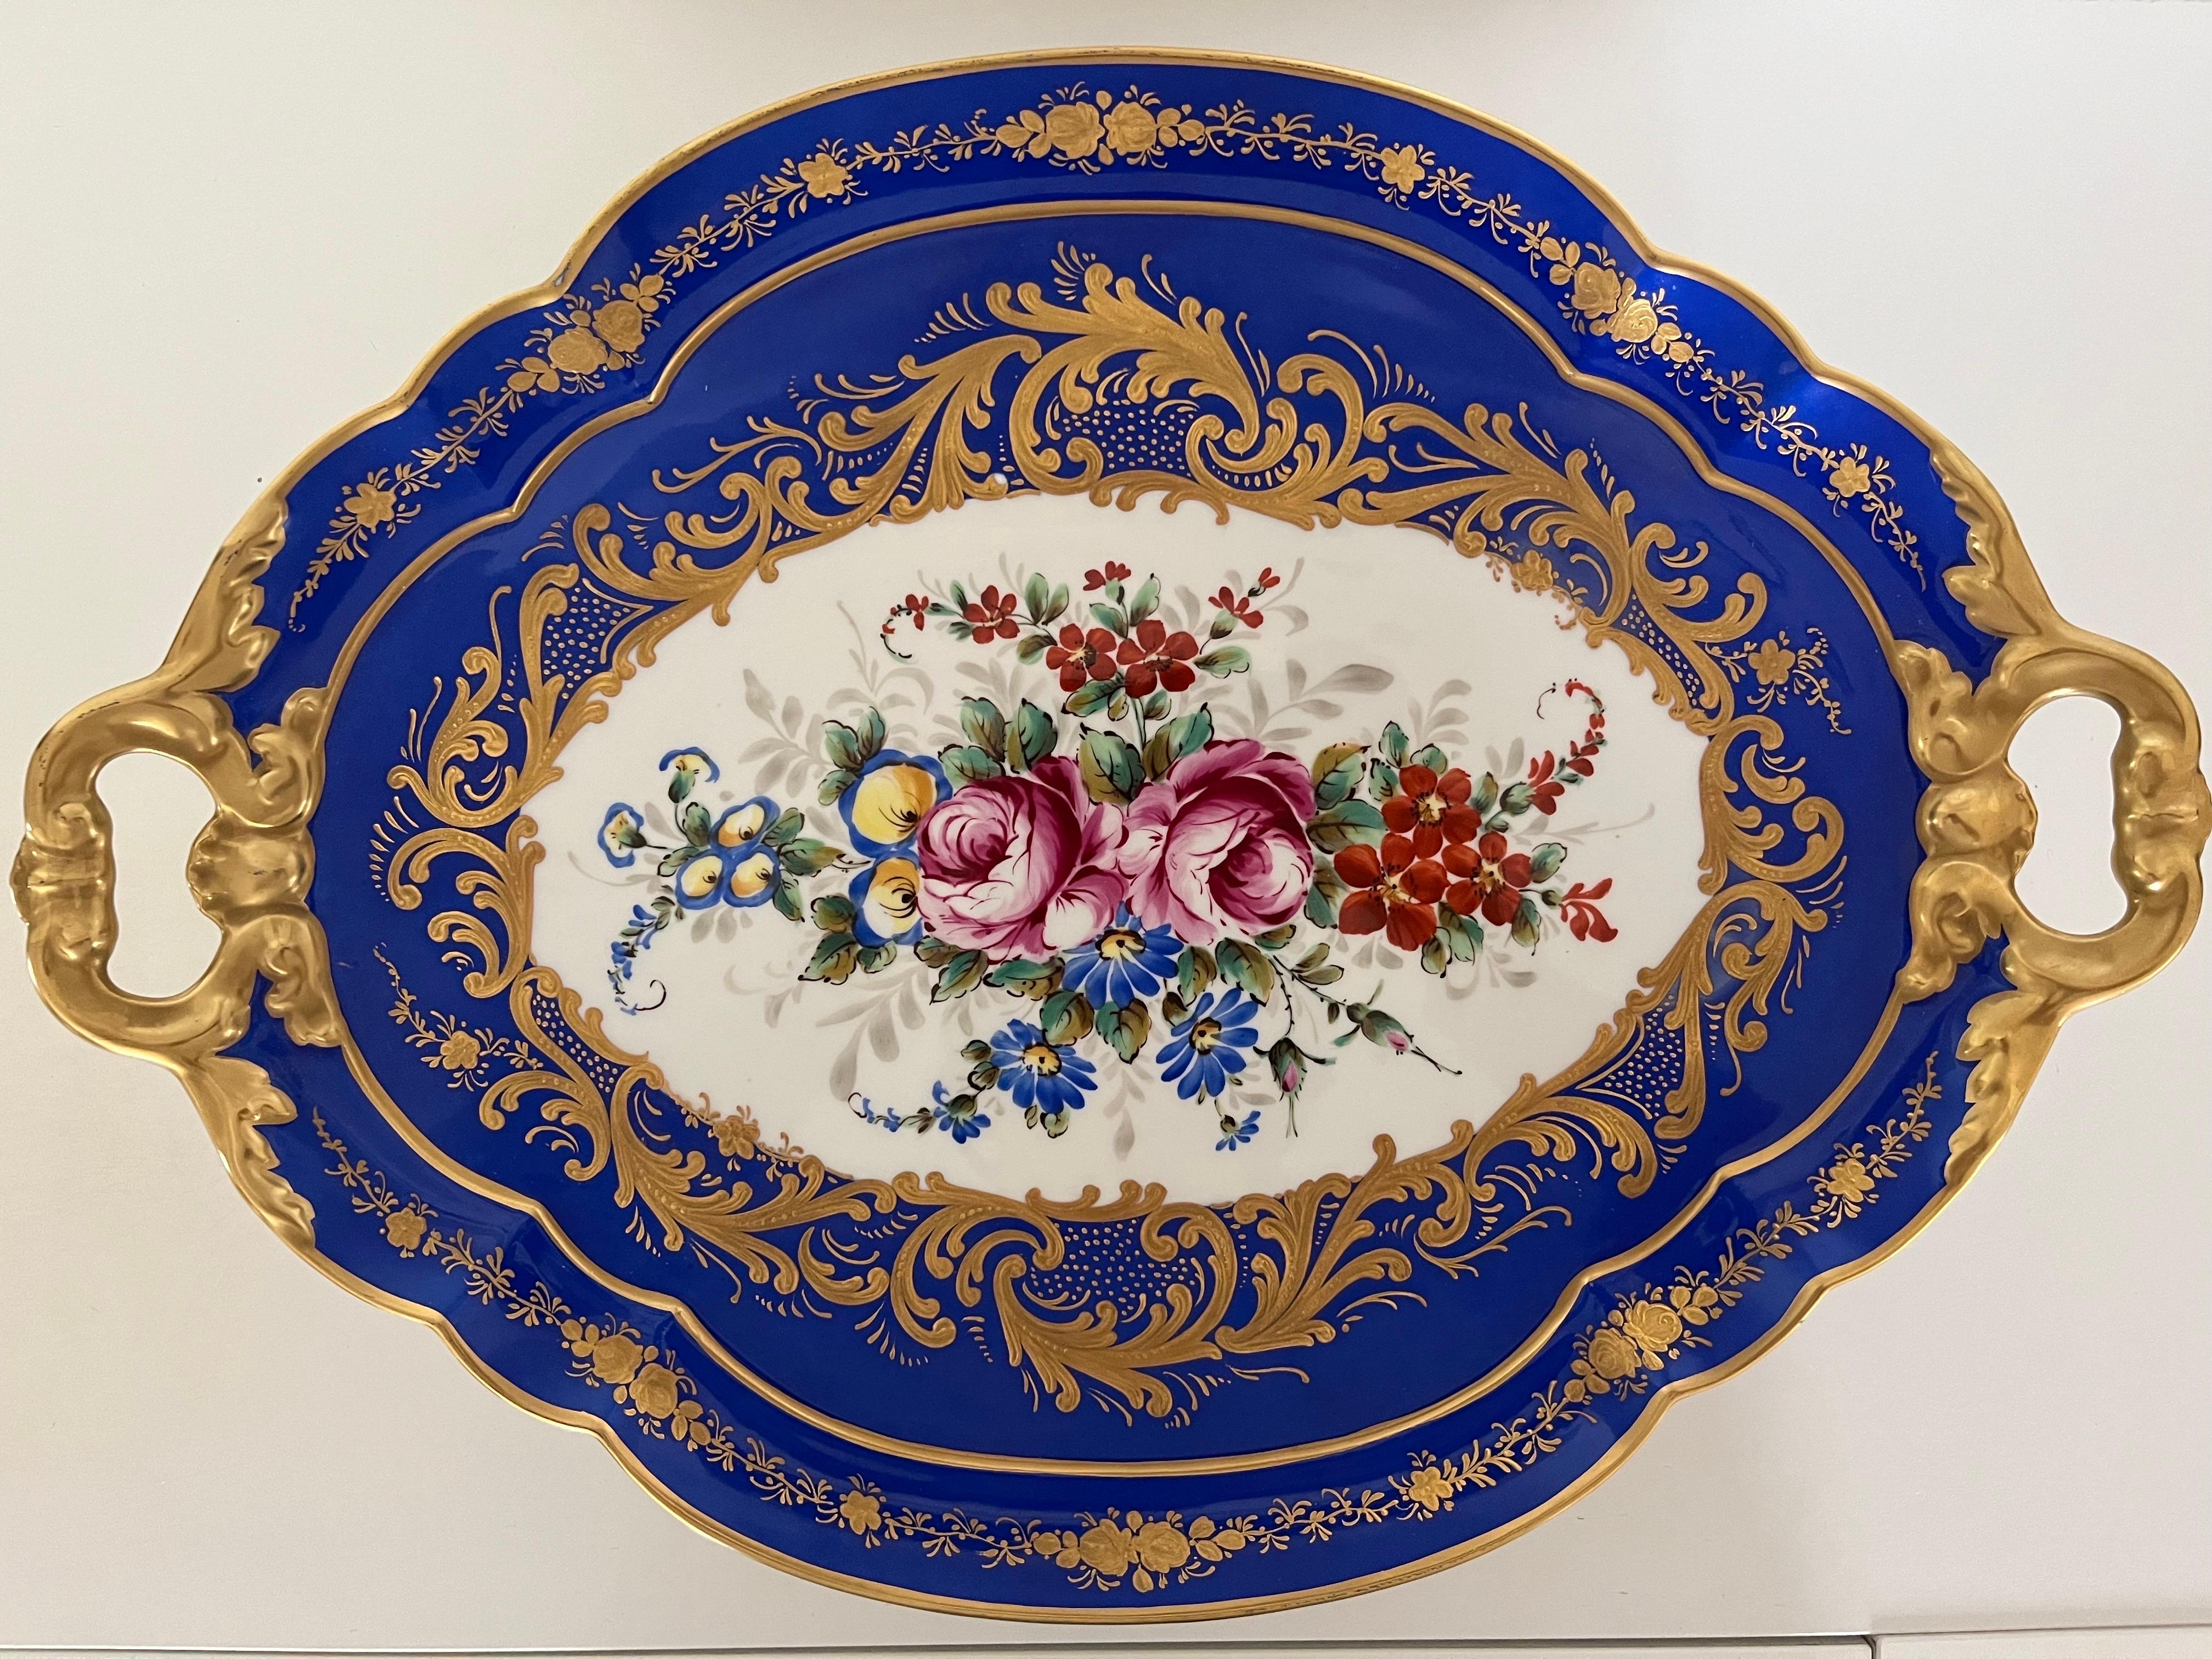 Vassoio Blu Limoges France Decorato a mano del '900 -Antiques- For Sale 1